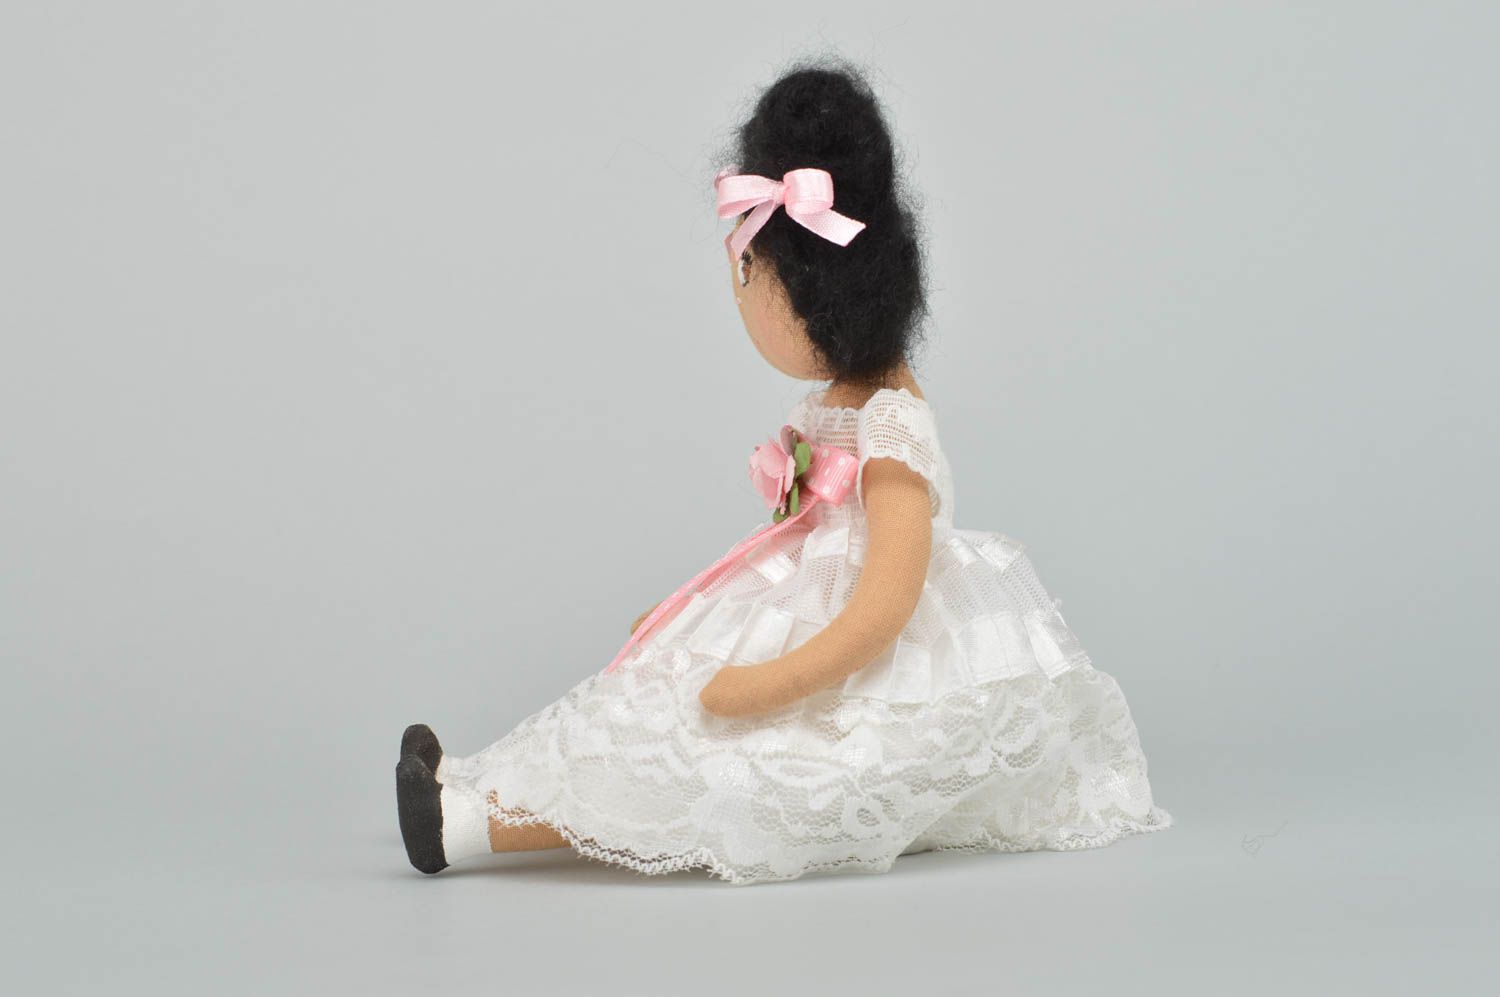 Designer beautiful doll handmade unusual cute toy stylish interior doll photo 4